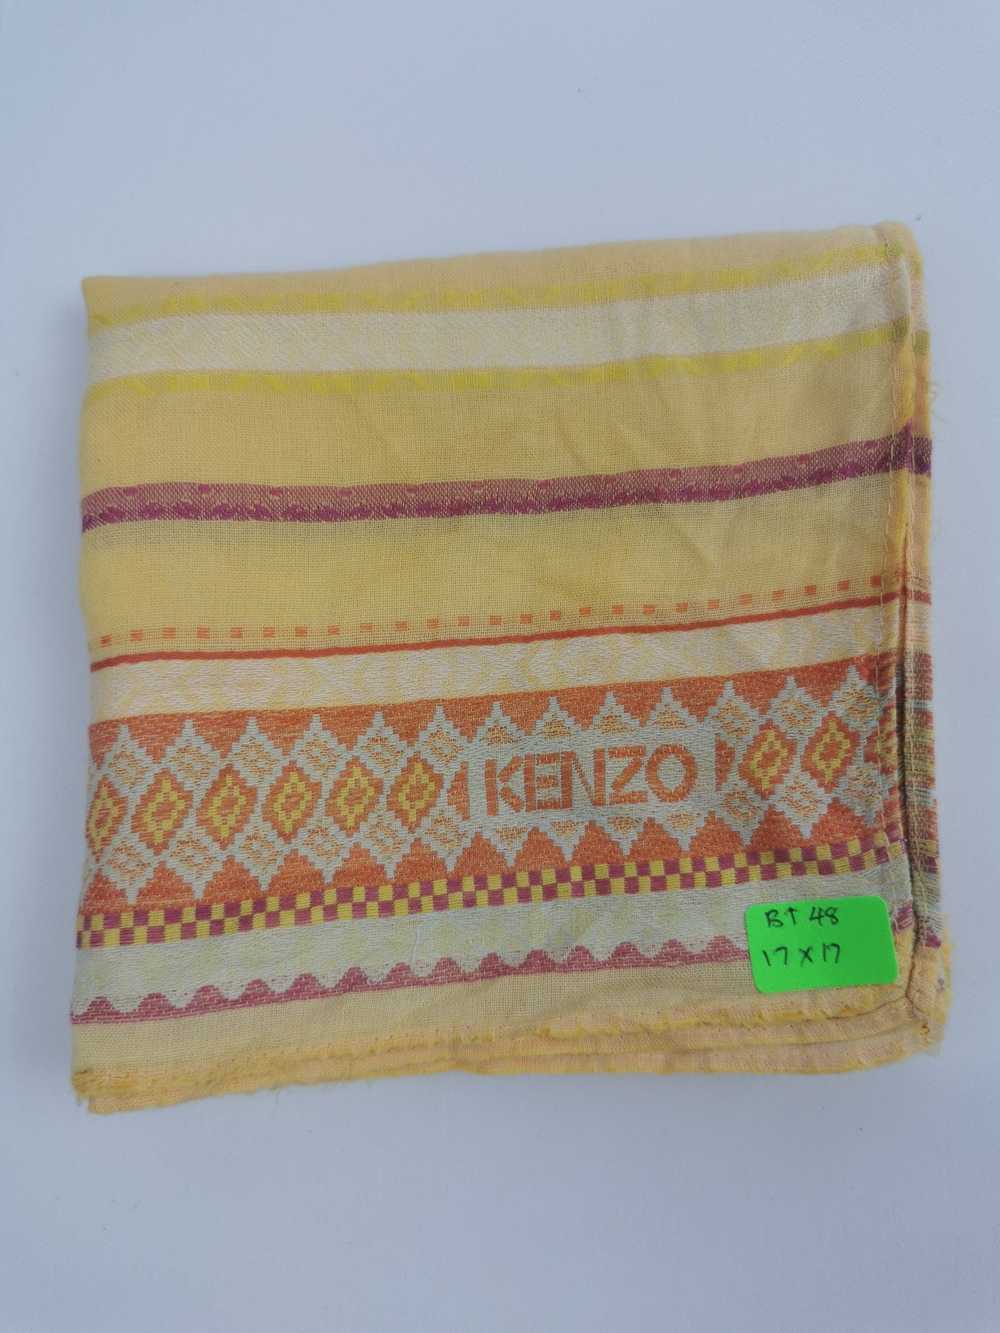 Kenzo Kenzo handkerchief / bandana / neckerchief - image 3